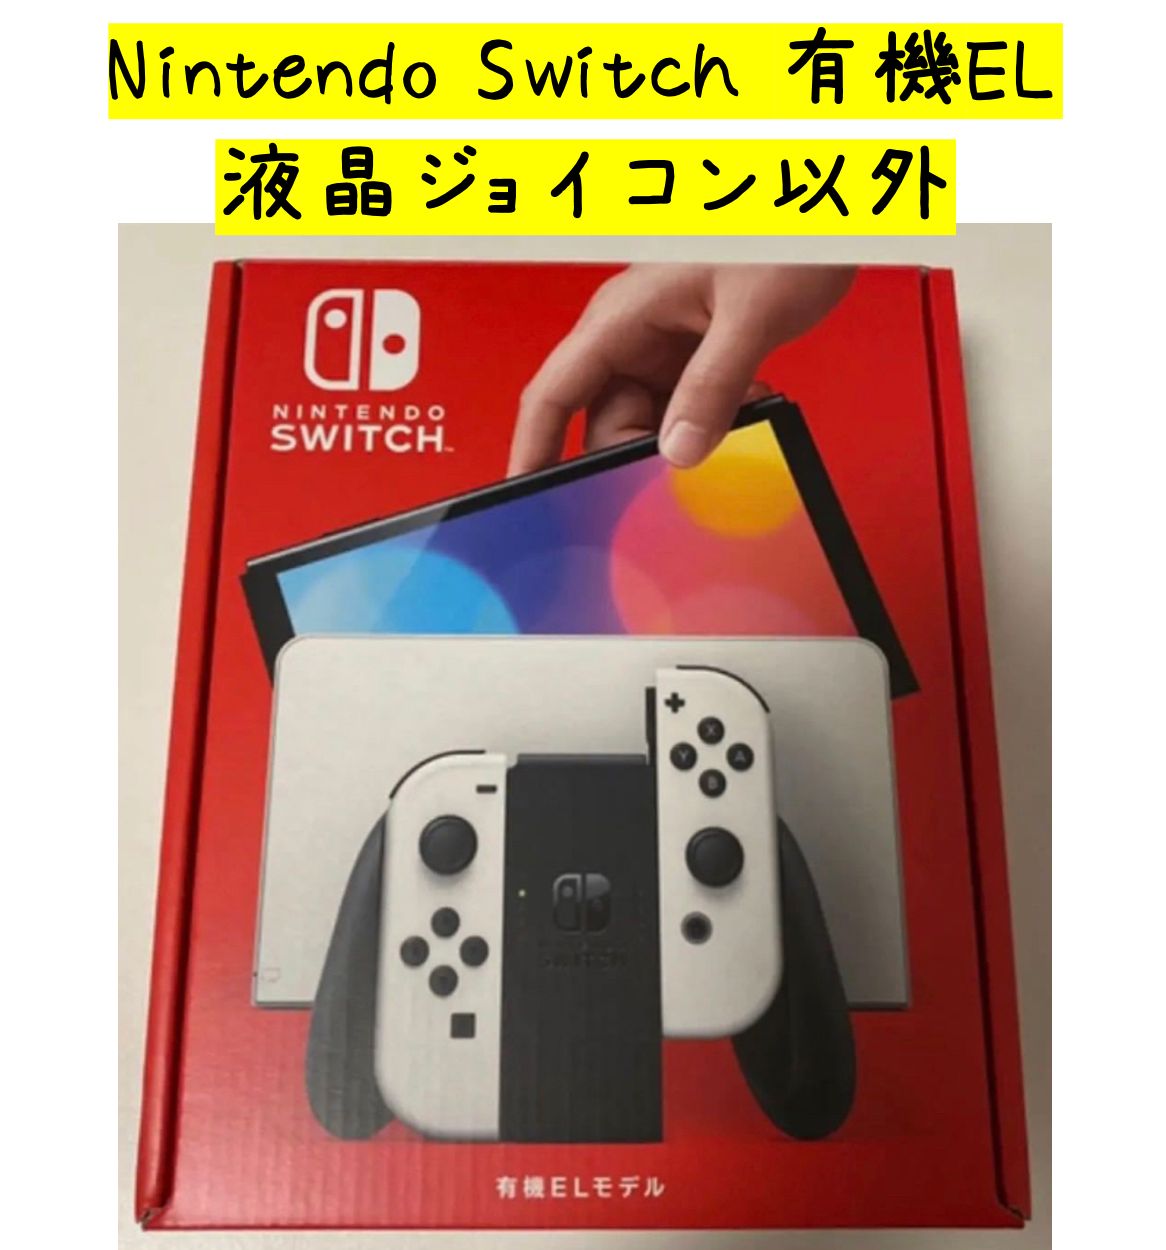 Nintendo Switch ジョイコン無し - www.sorbillomenu.com